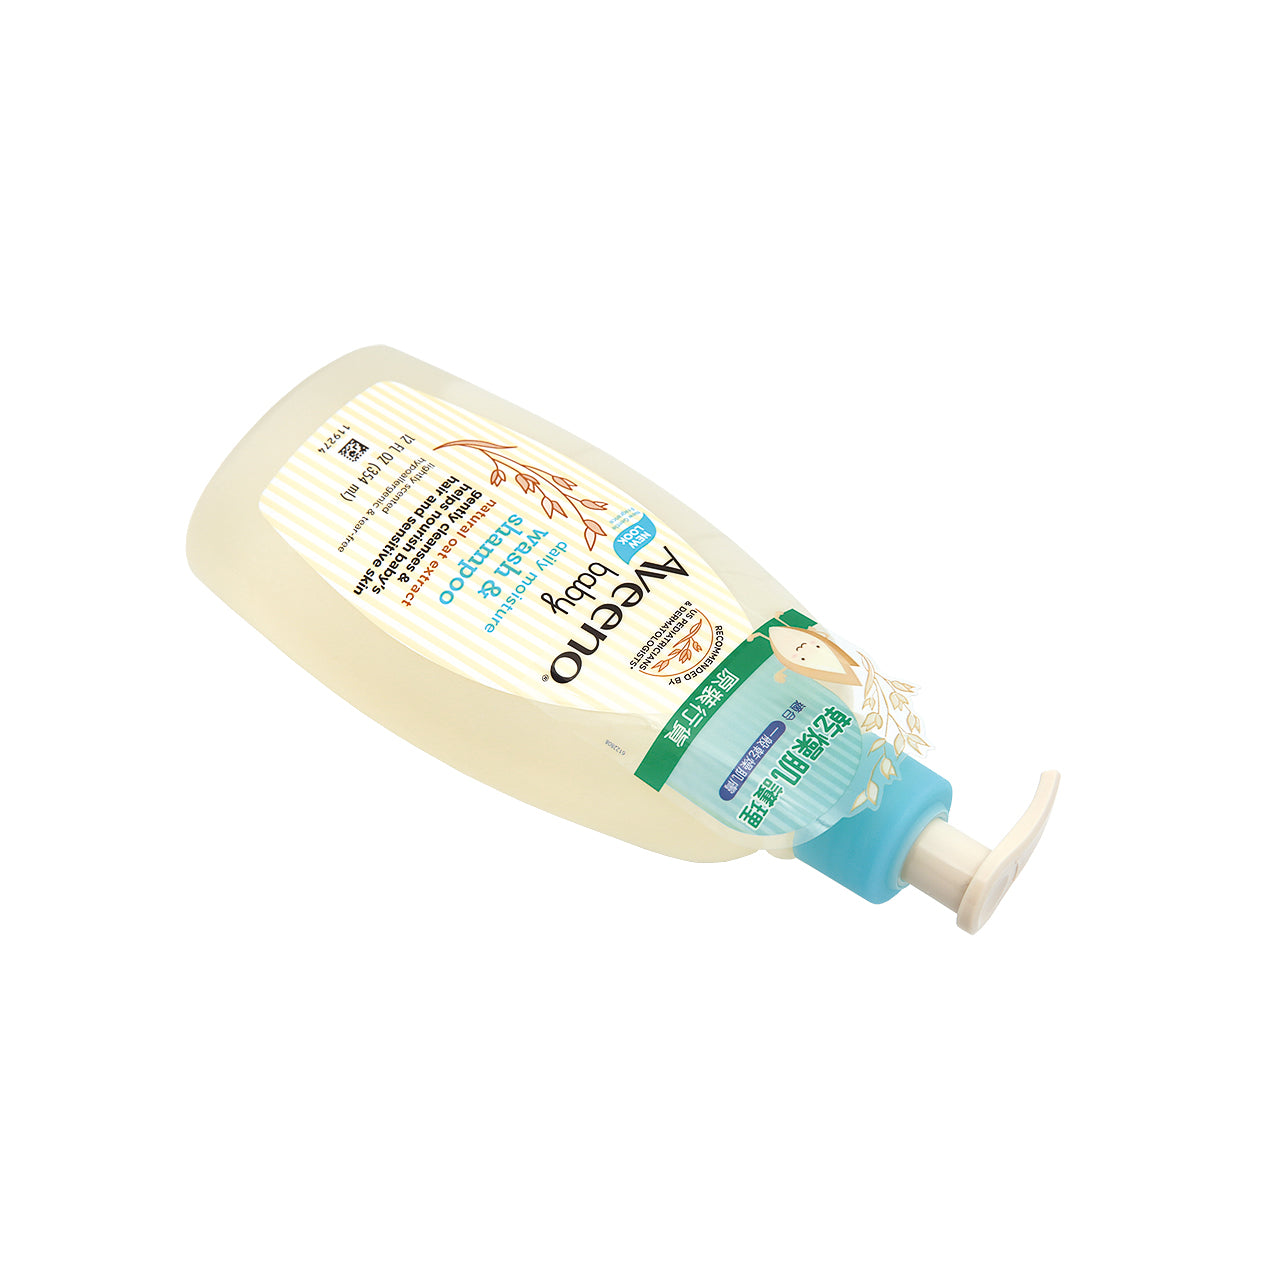 Aveeno Baby Wash & Shampoo 354ml, Sensitive Skin, Beauty